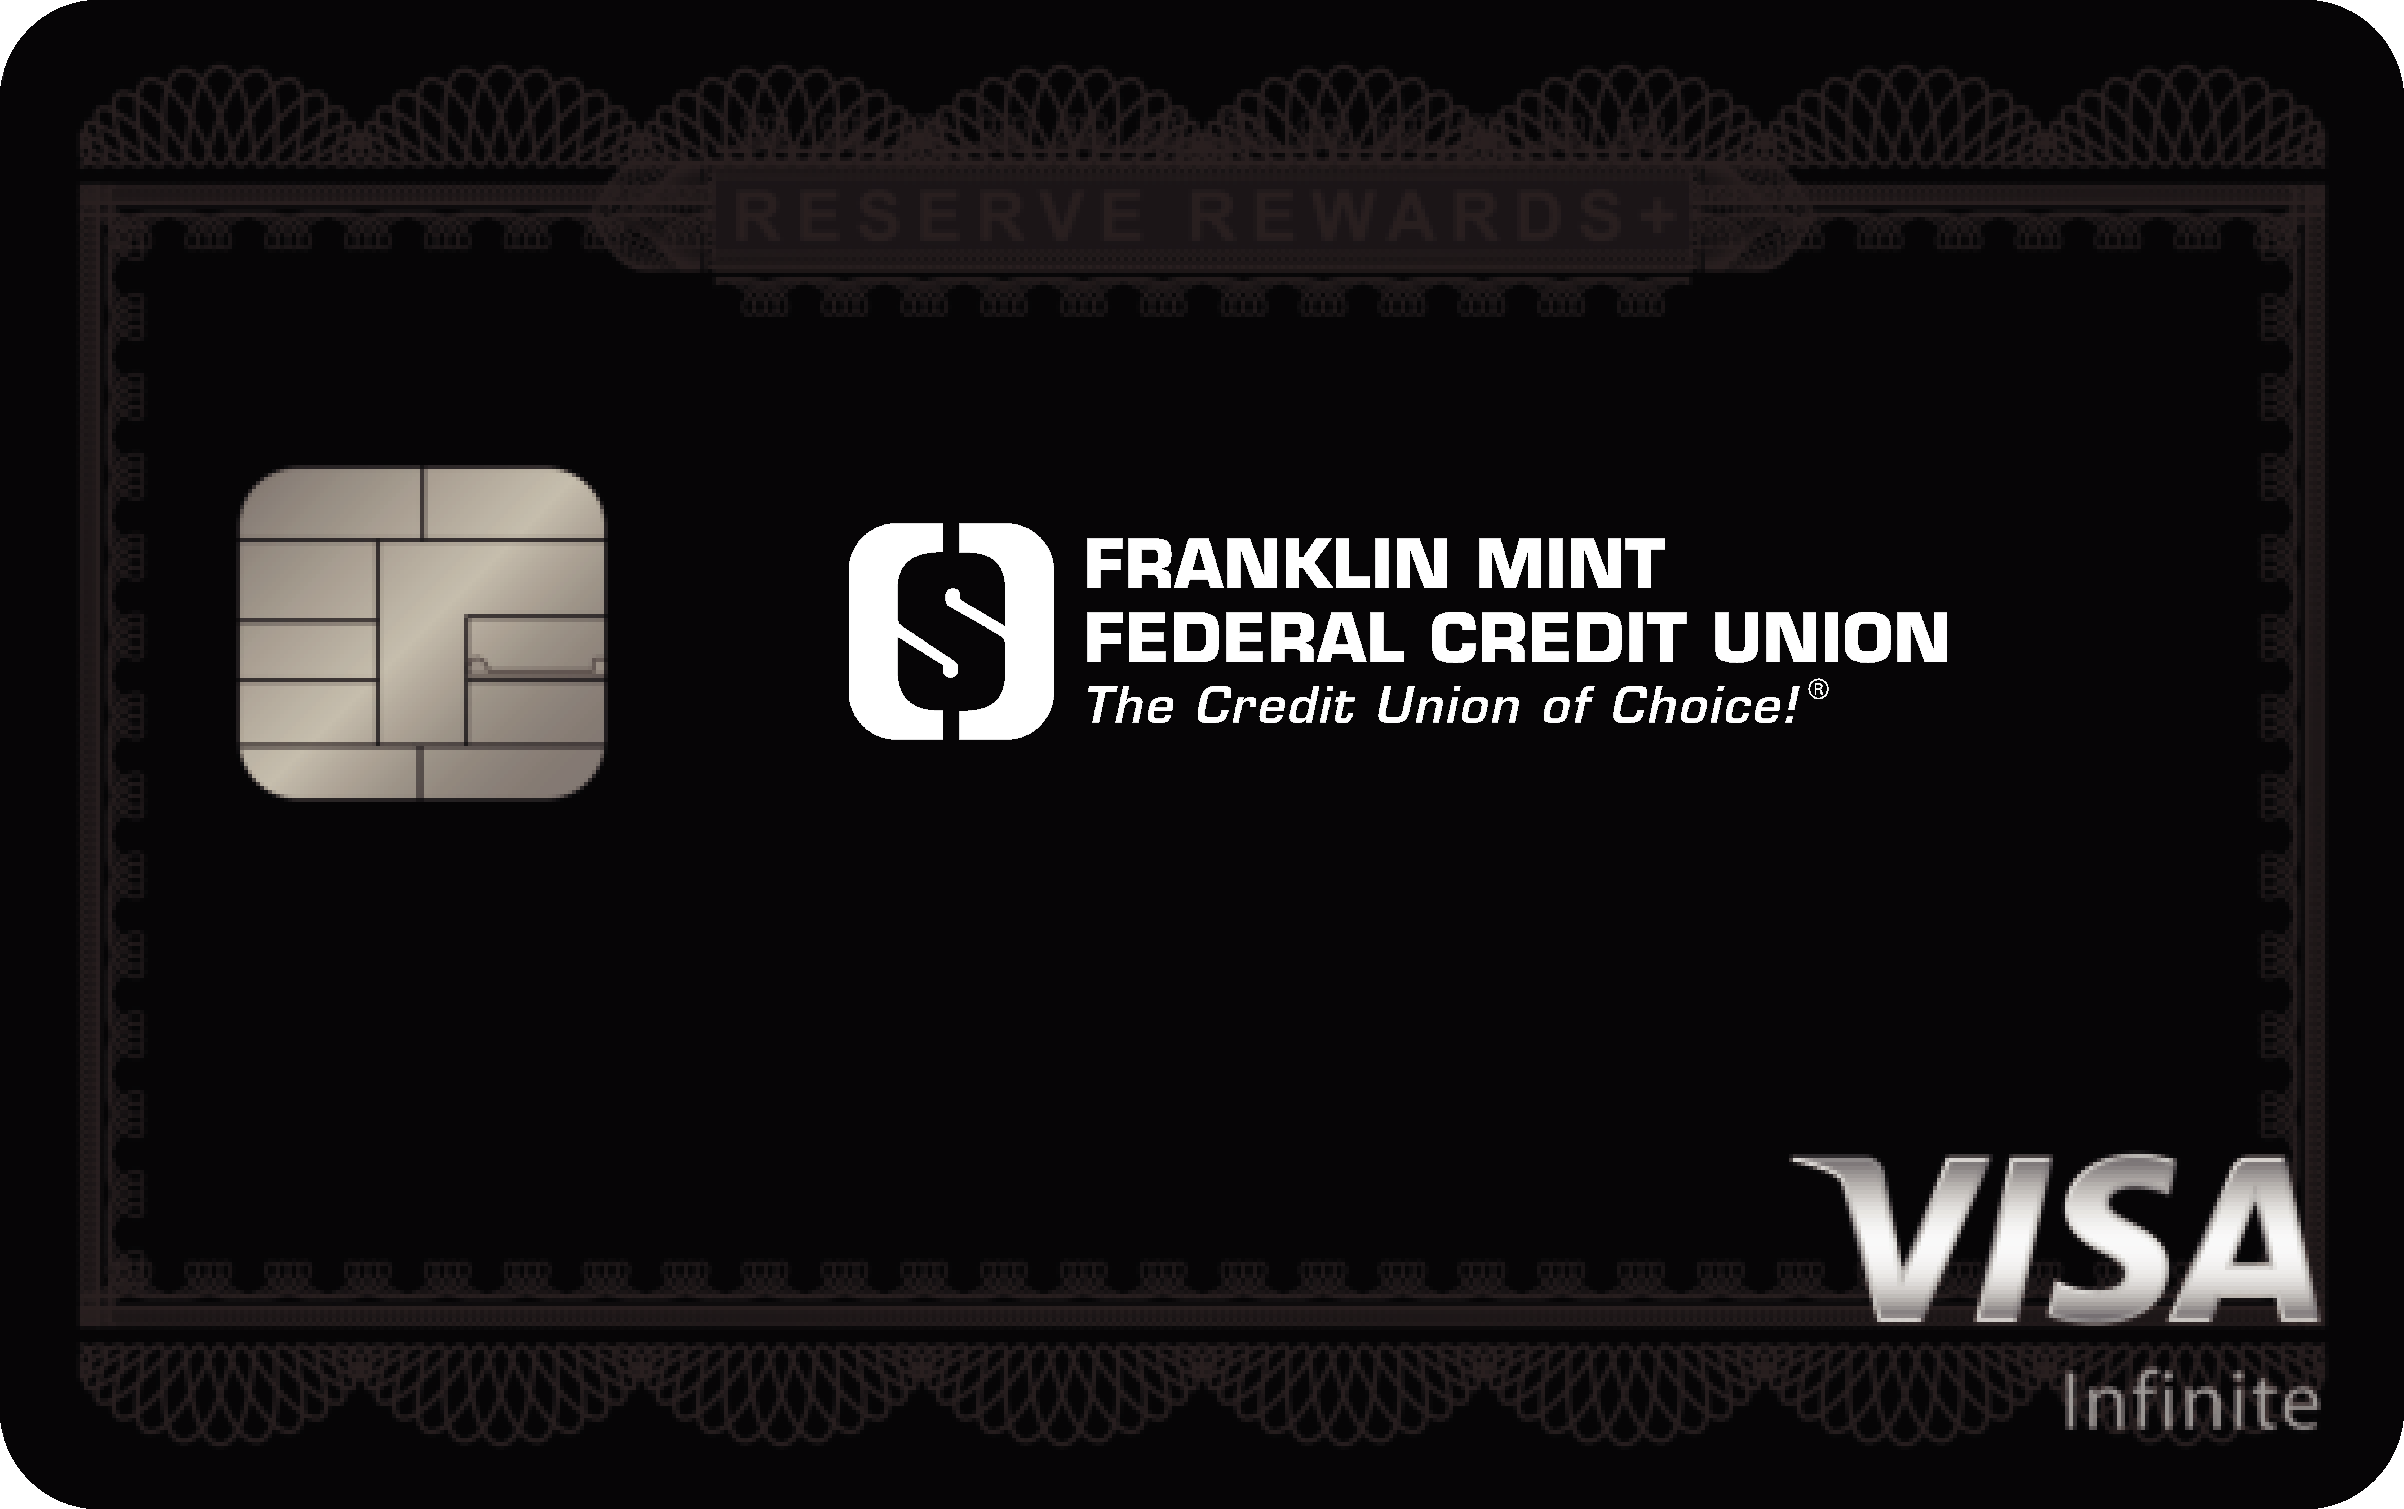 Franklin Mint Federal Credit Union Reserve Rewards+ Card